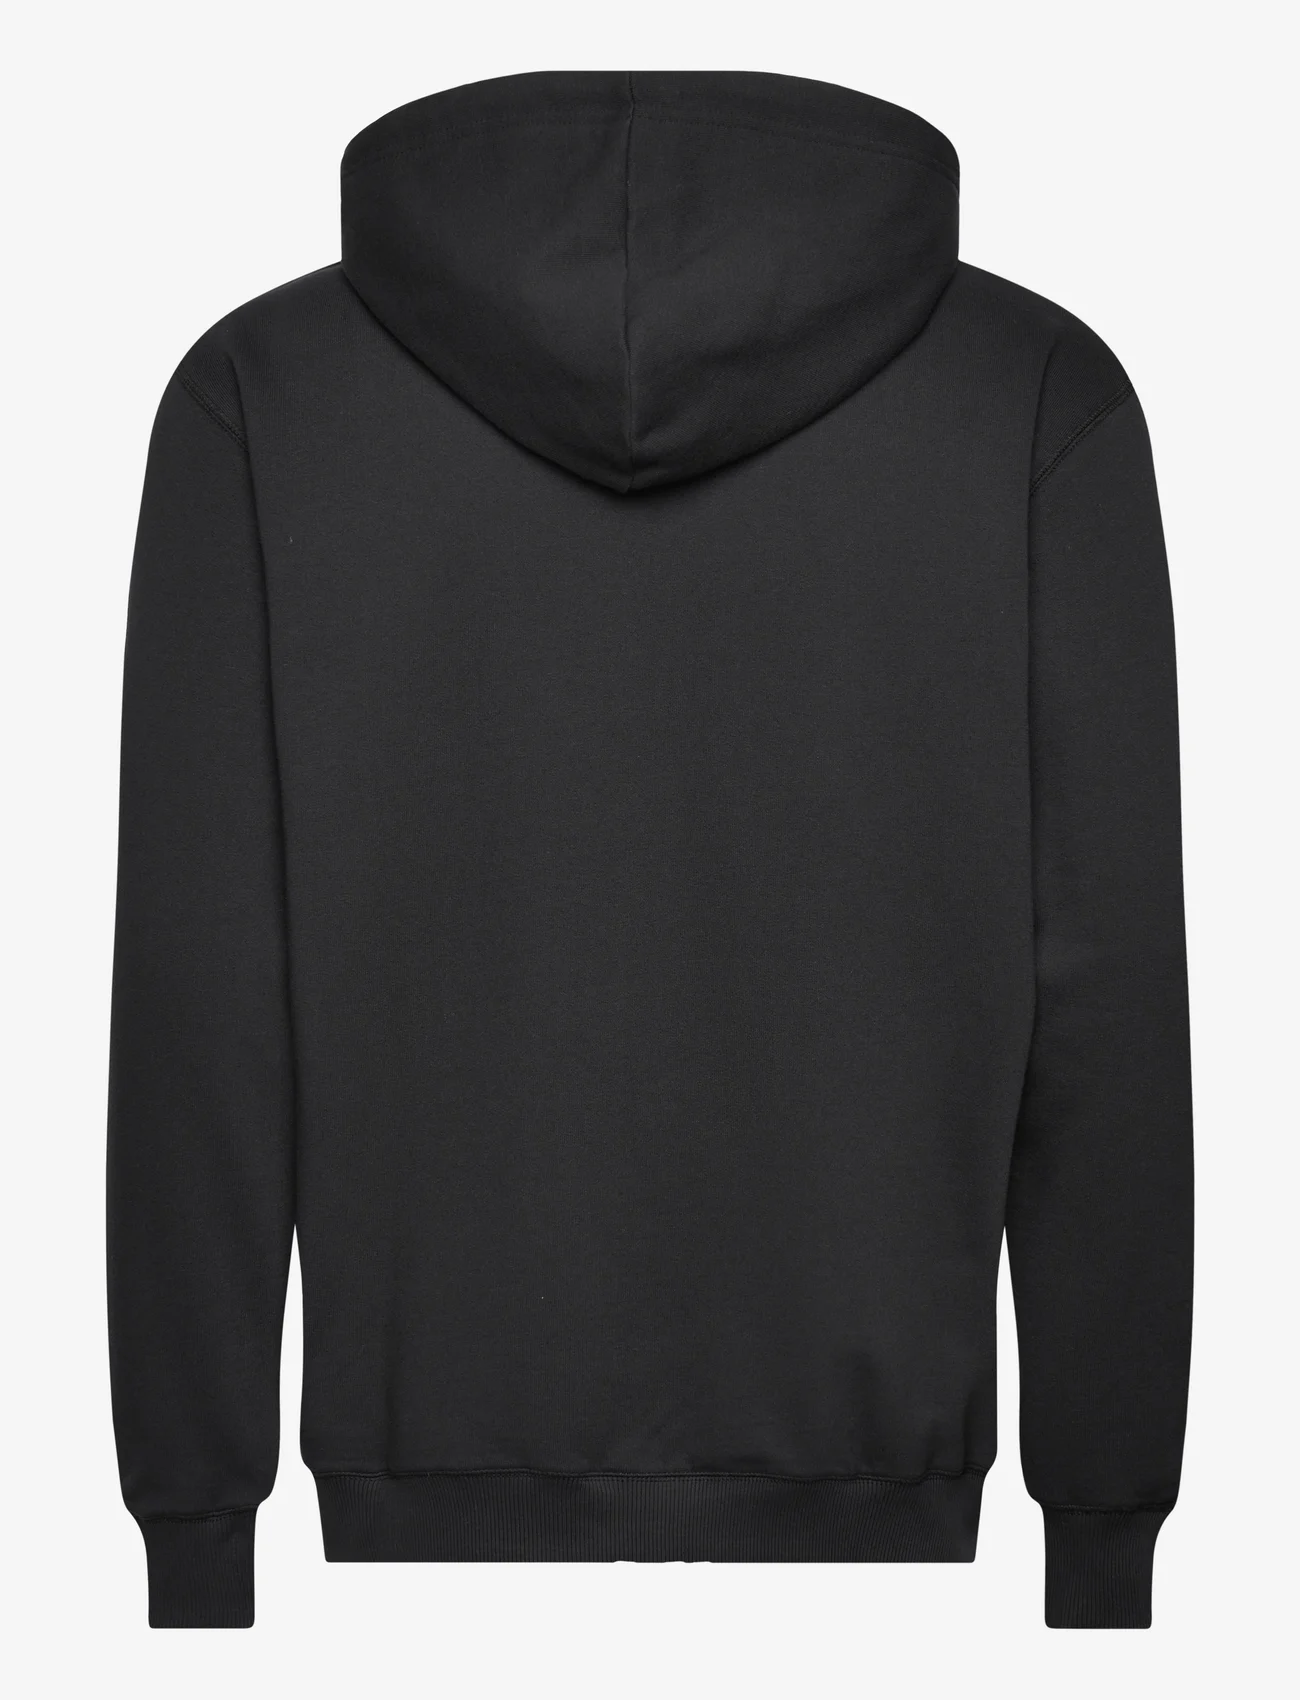 Makia - Ferry Hooded Sweatshirt - nordisk style - black - 1